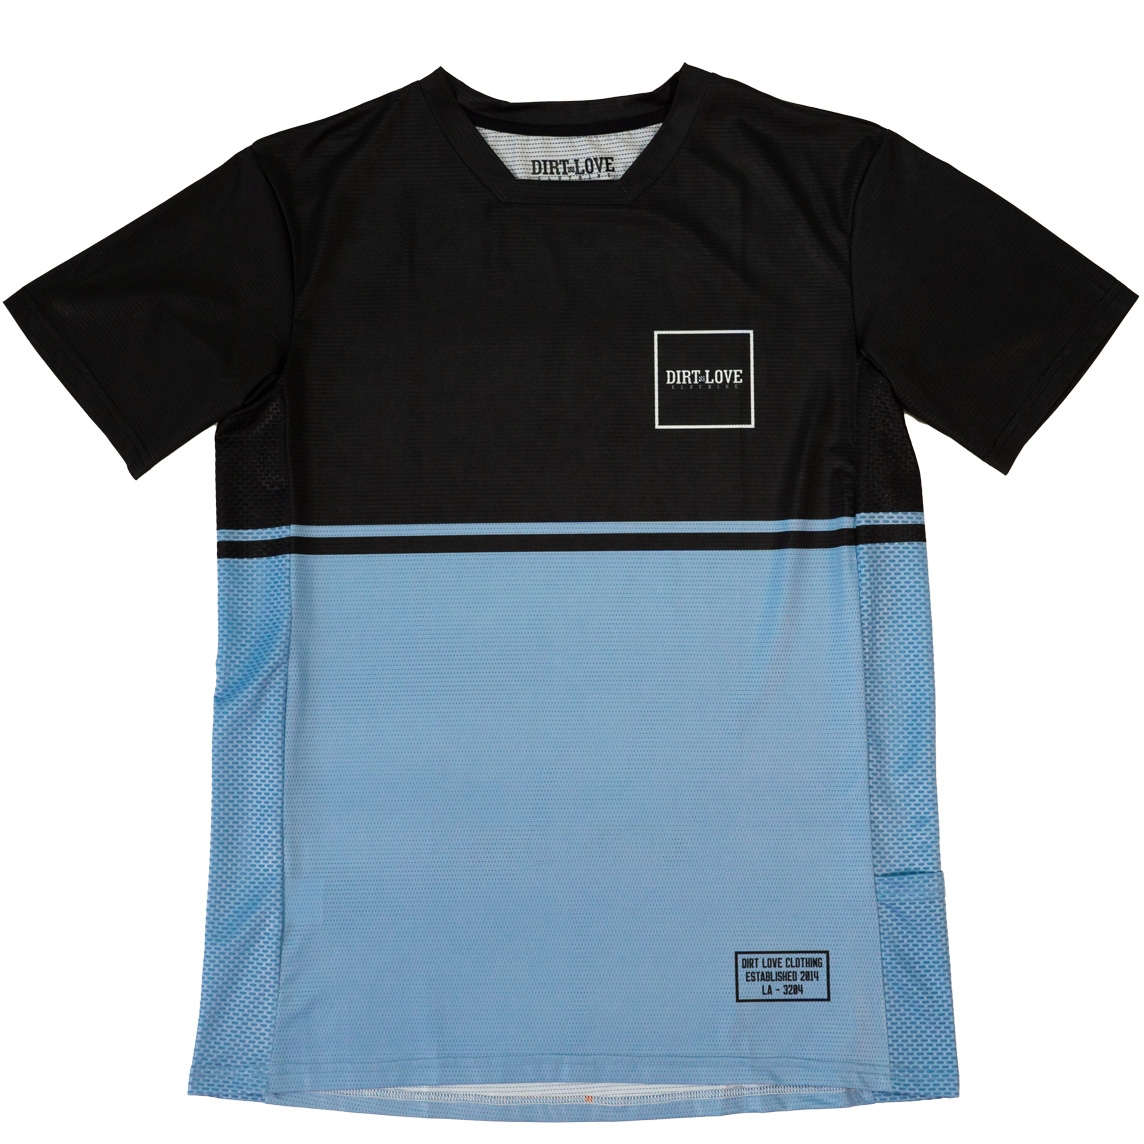 Productfoto van Dirt Love 2 Tone Riding Shirt - black/blue